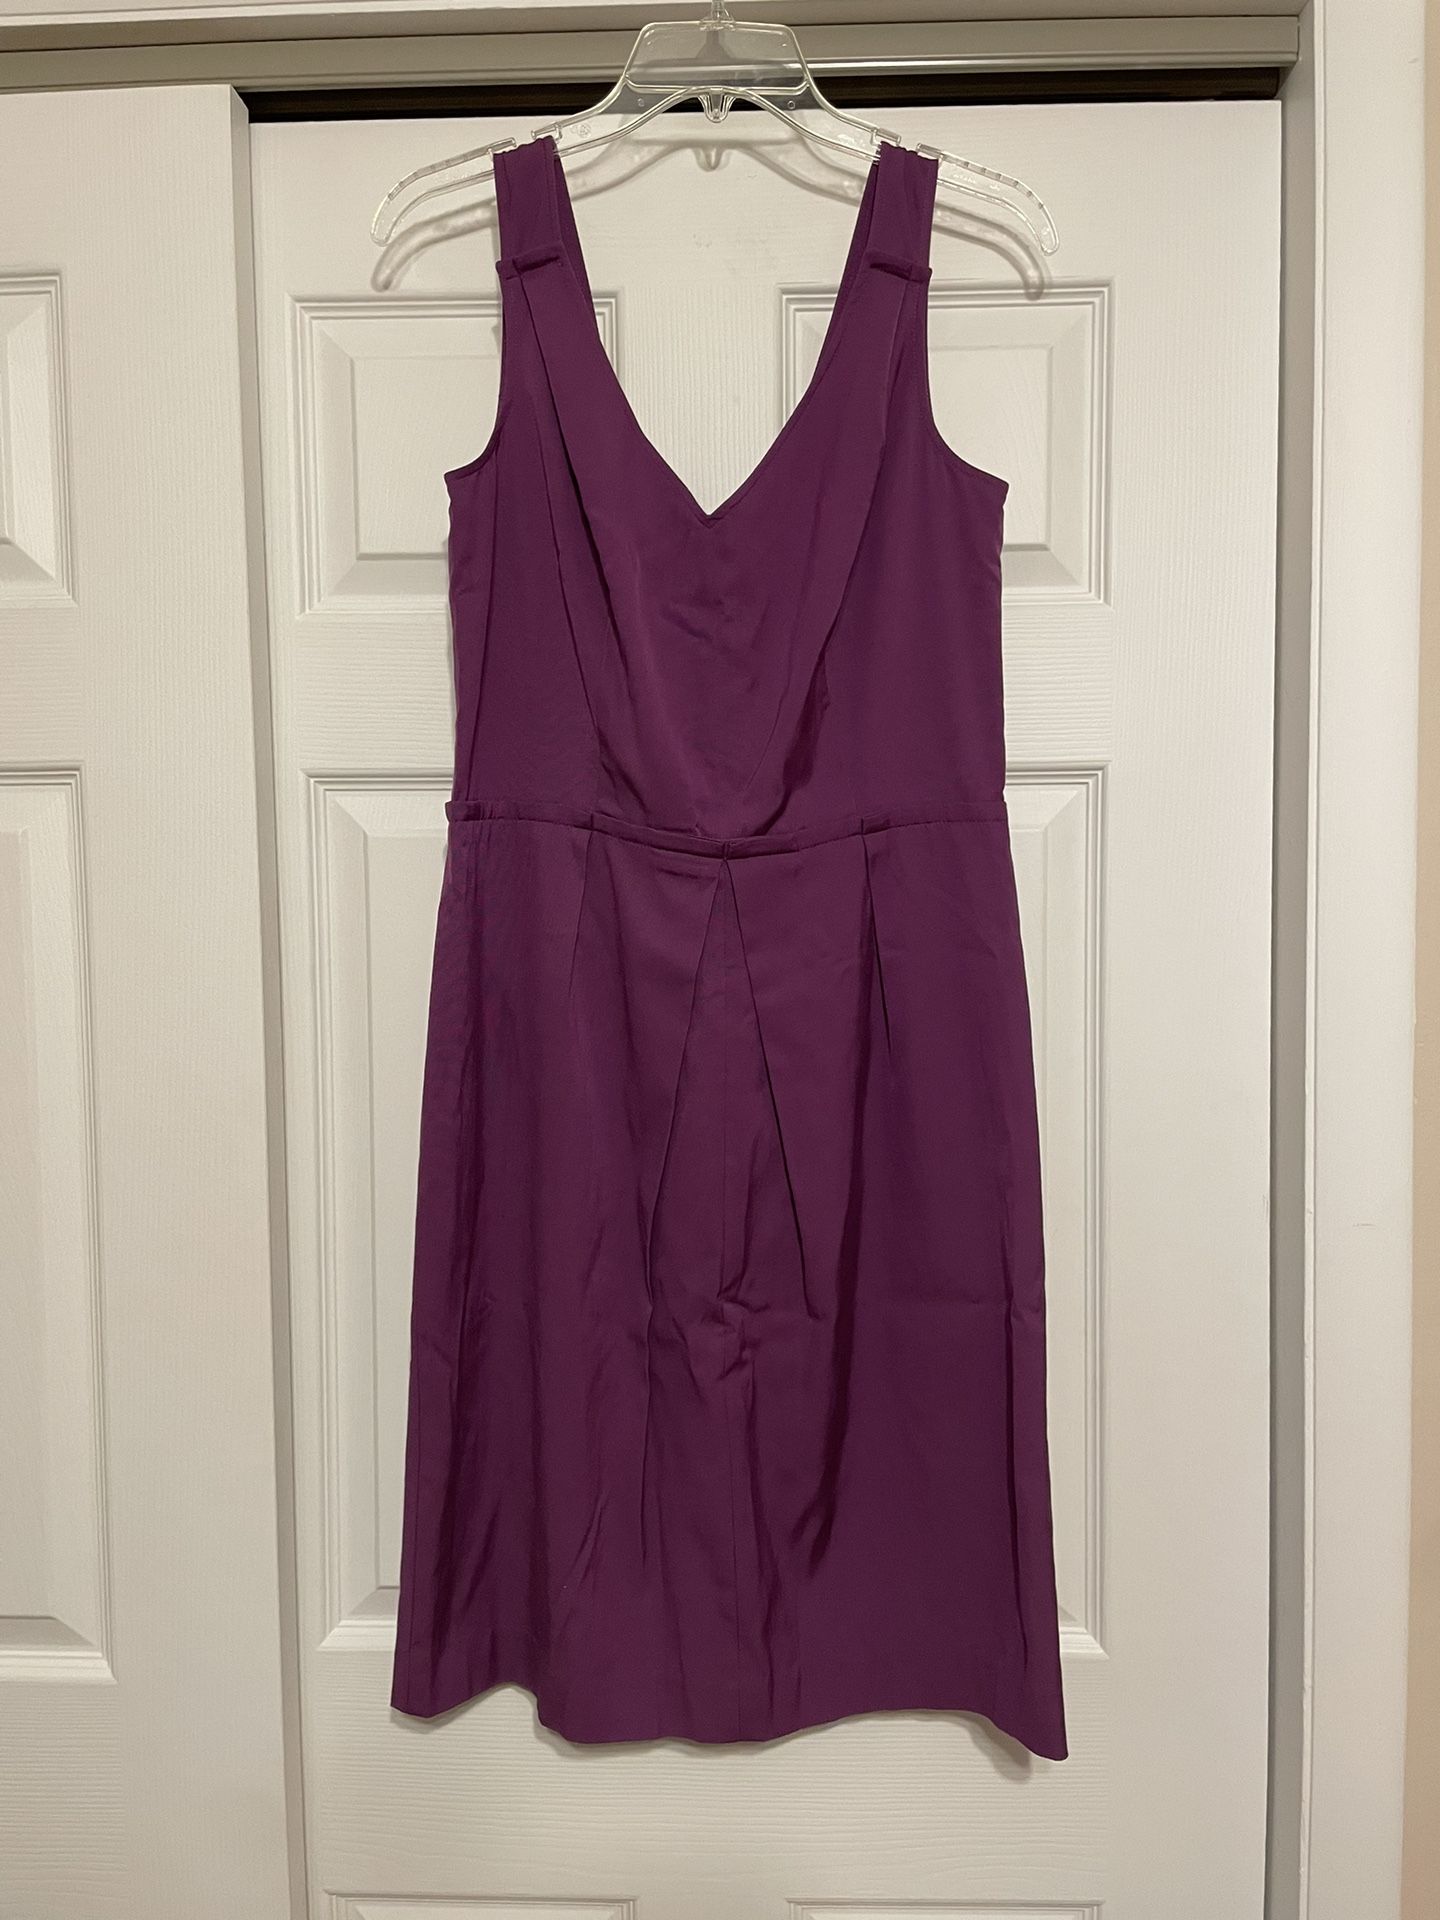 Brand New Talbots Purple Front Pleated Dress - Size 8